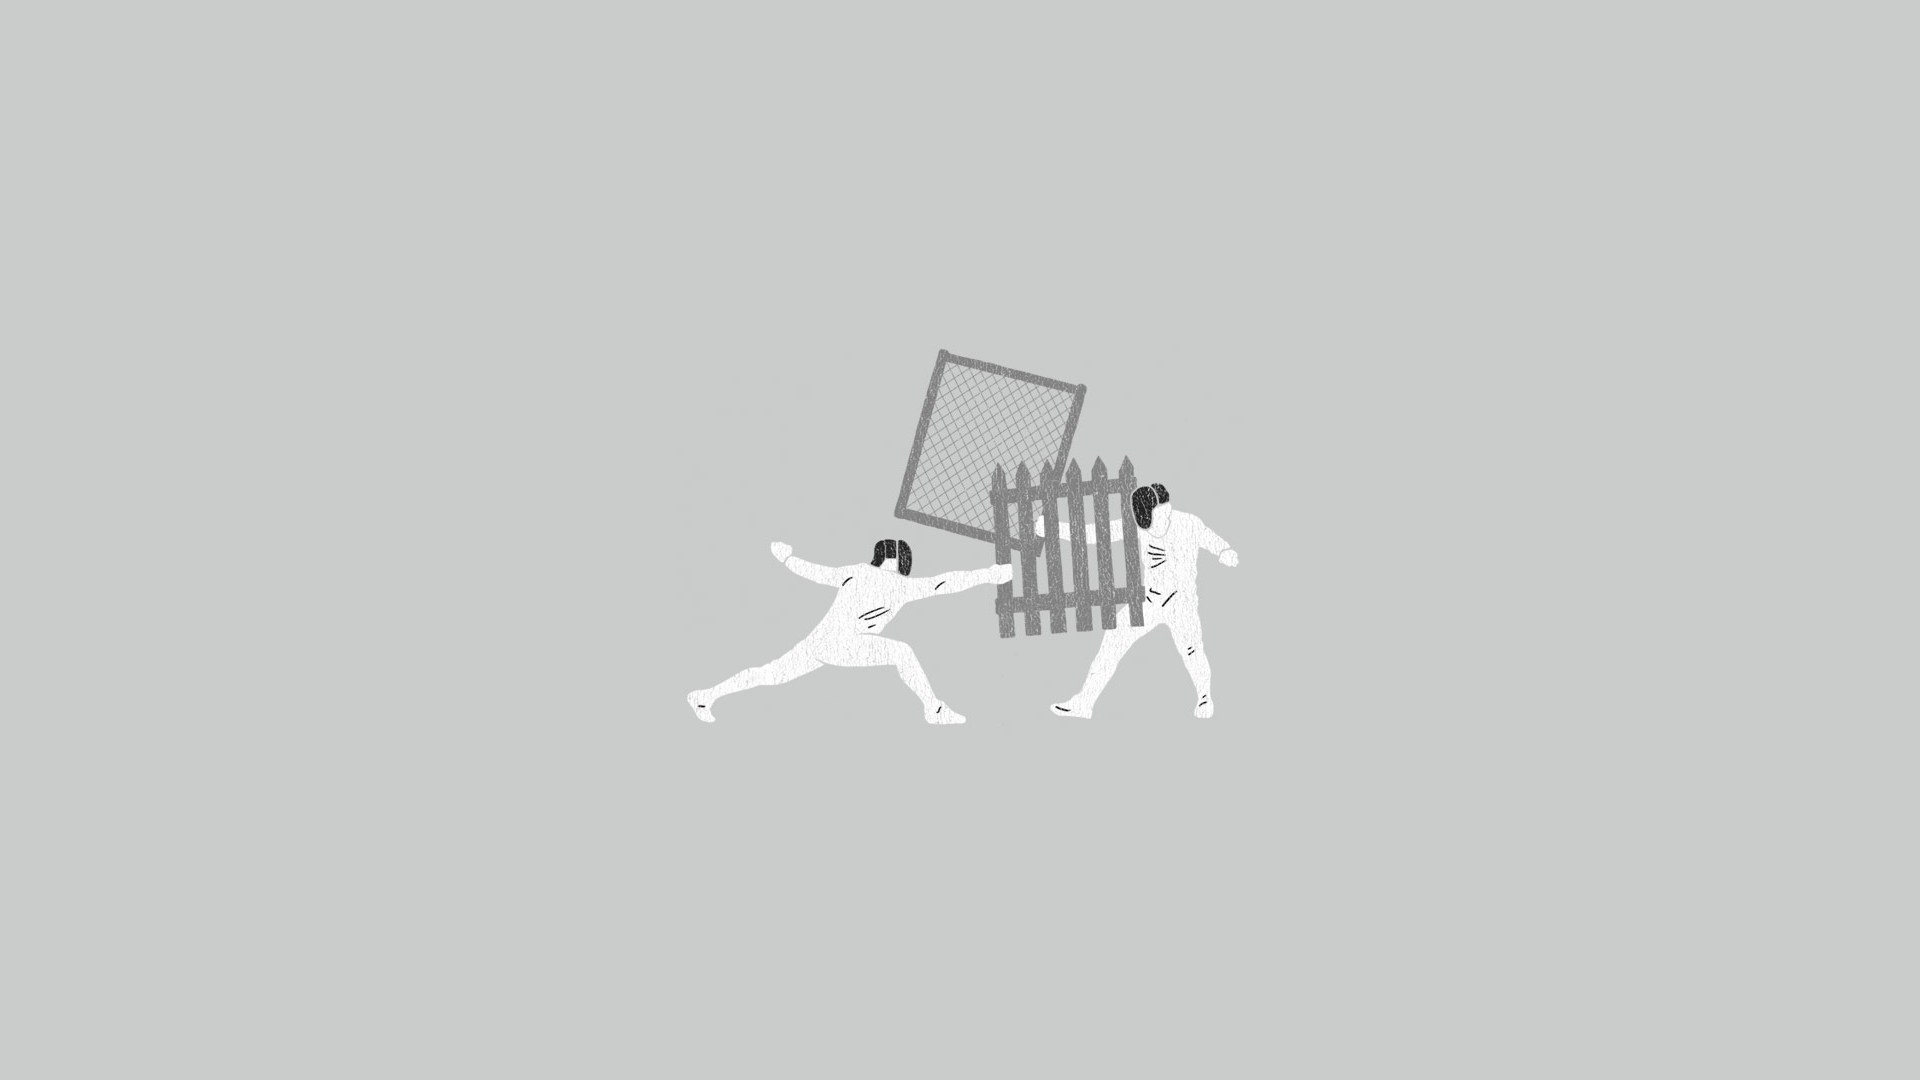 General 1920x1080 humor minimalism fencing (sport) fence simple background digital art